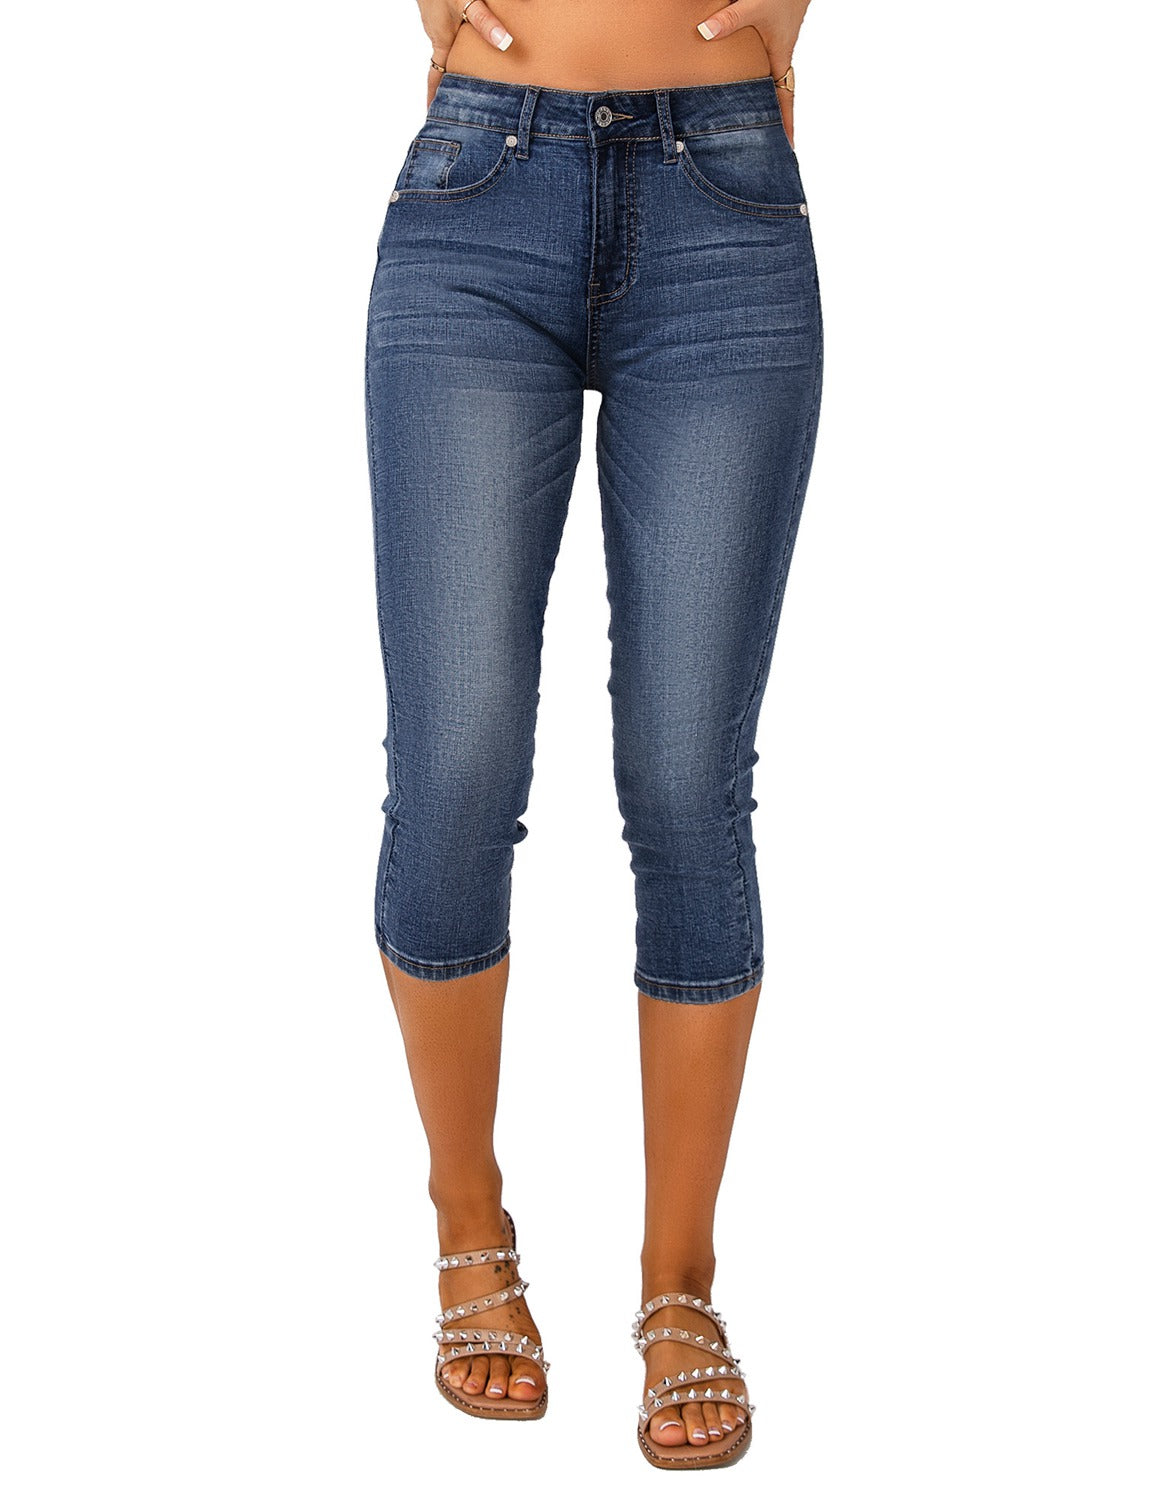 Vetinee Women's High Rise Capri Jeans Ripped Skinny Fit Capri